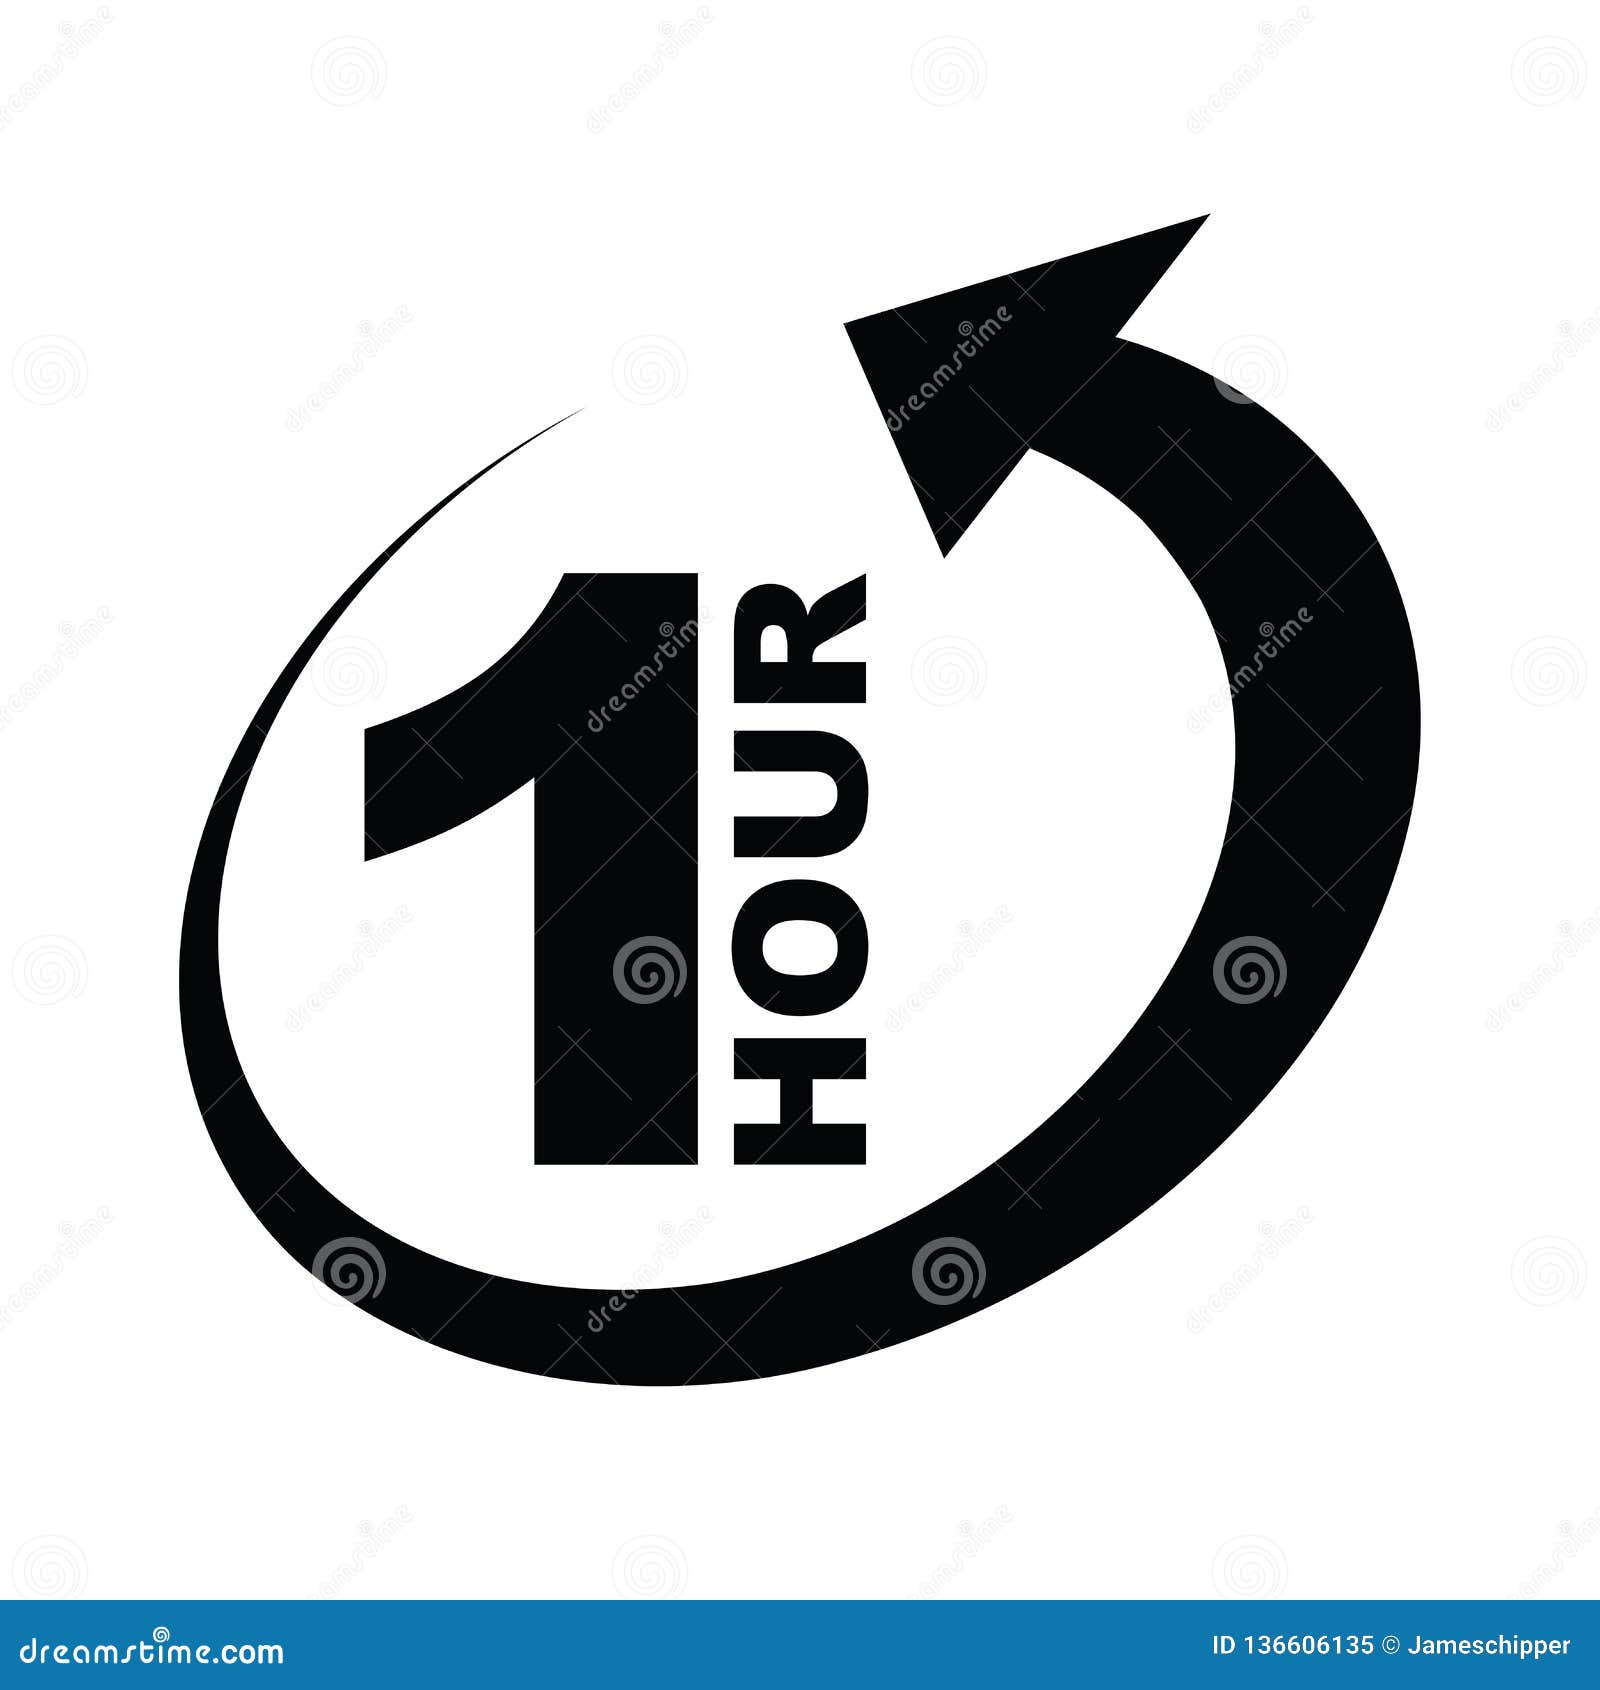 one hour arrow icon